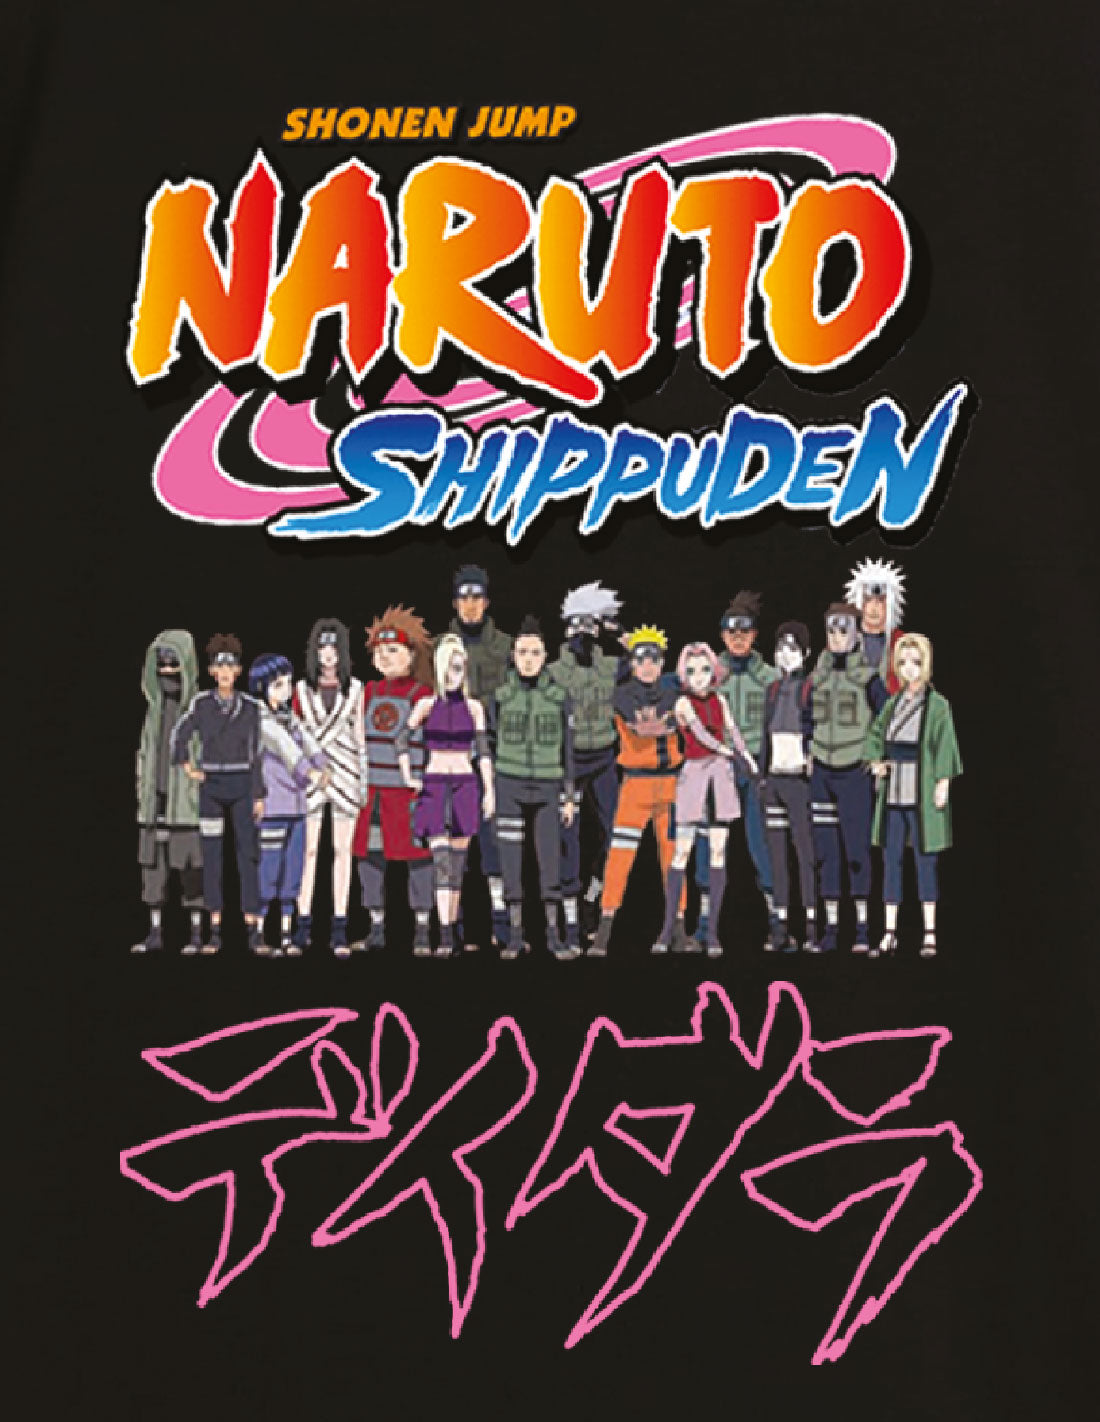 Naruto Shippūden oversized t-shirt - Characters